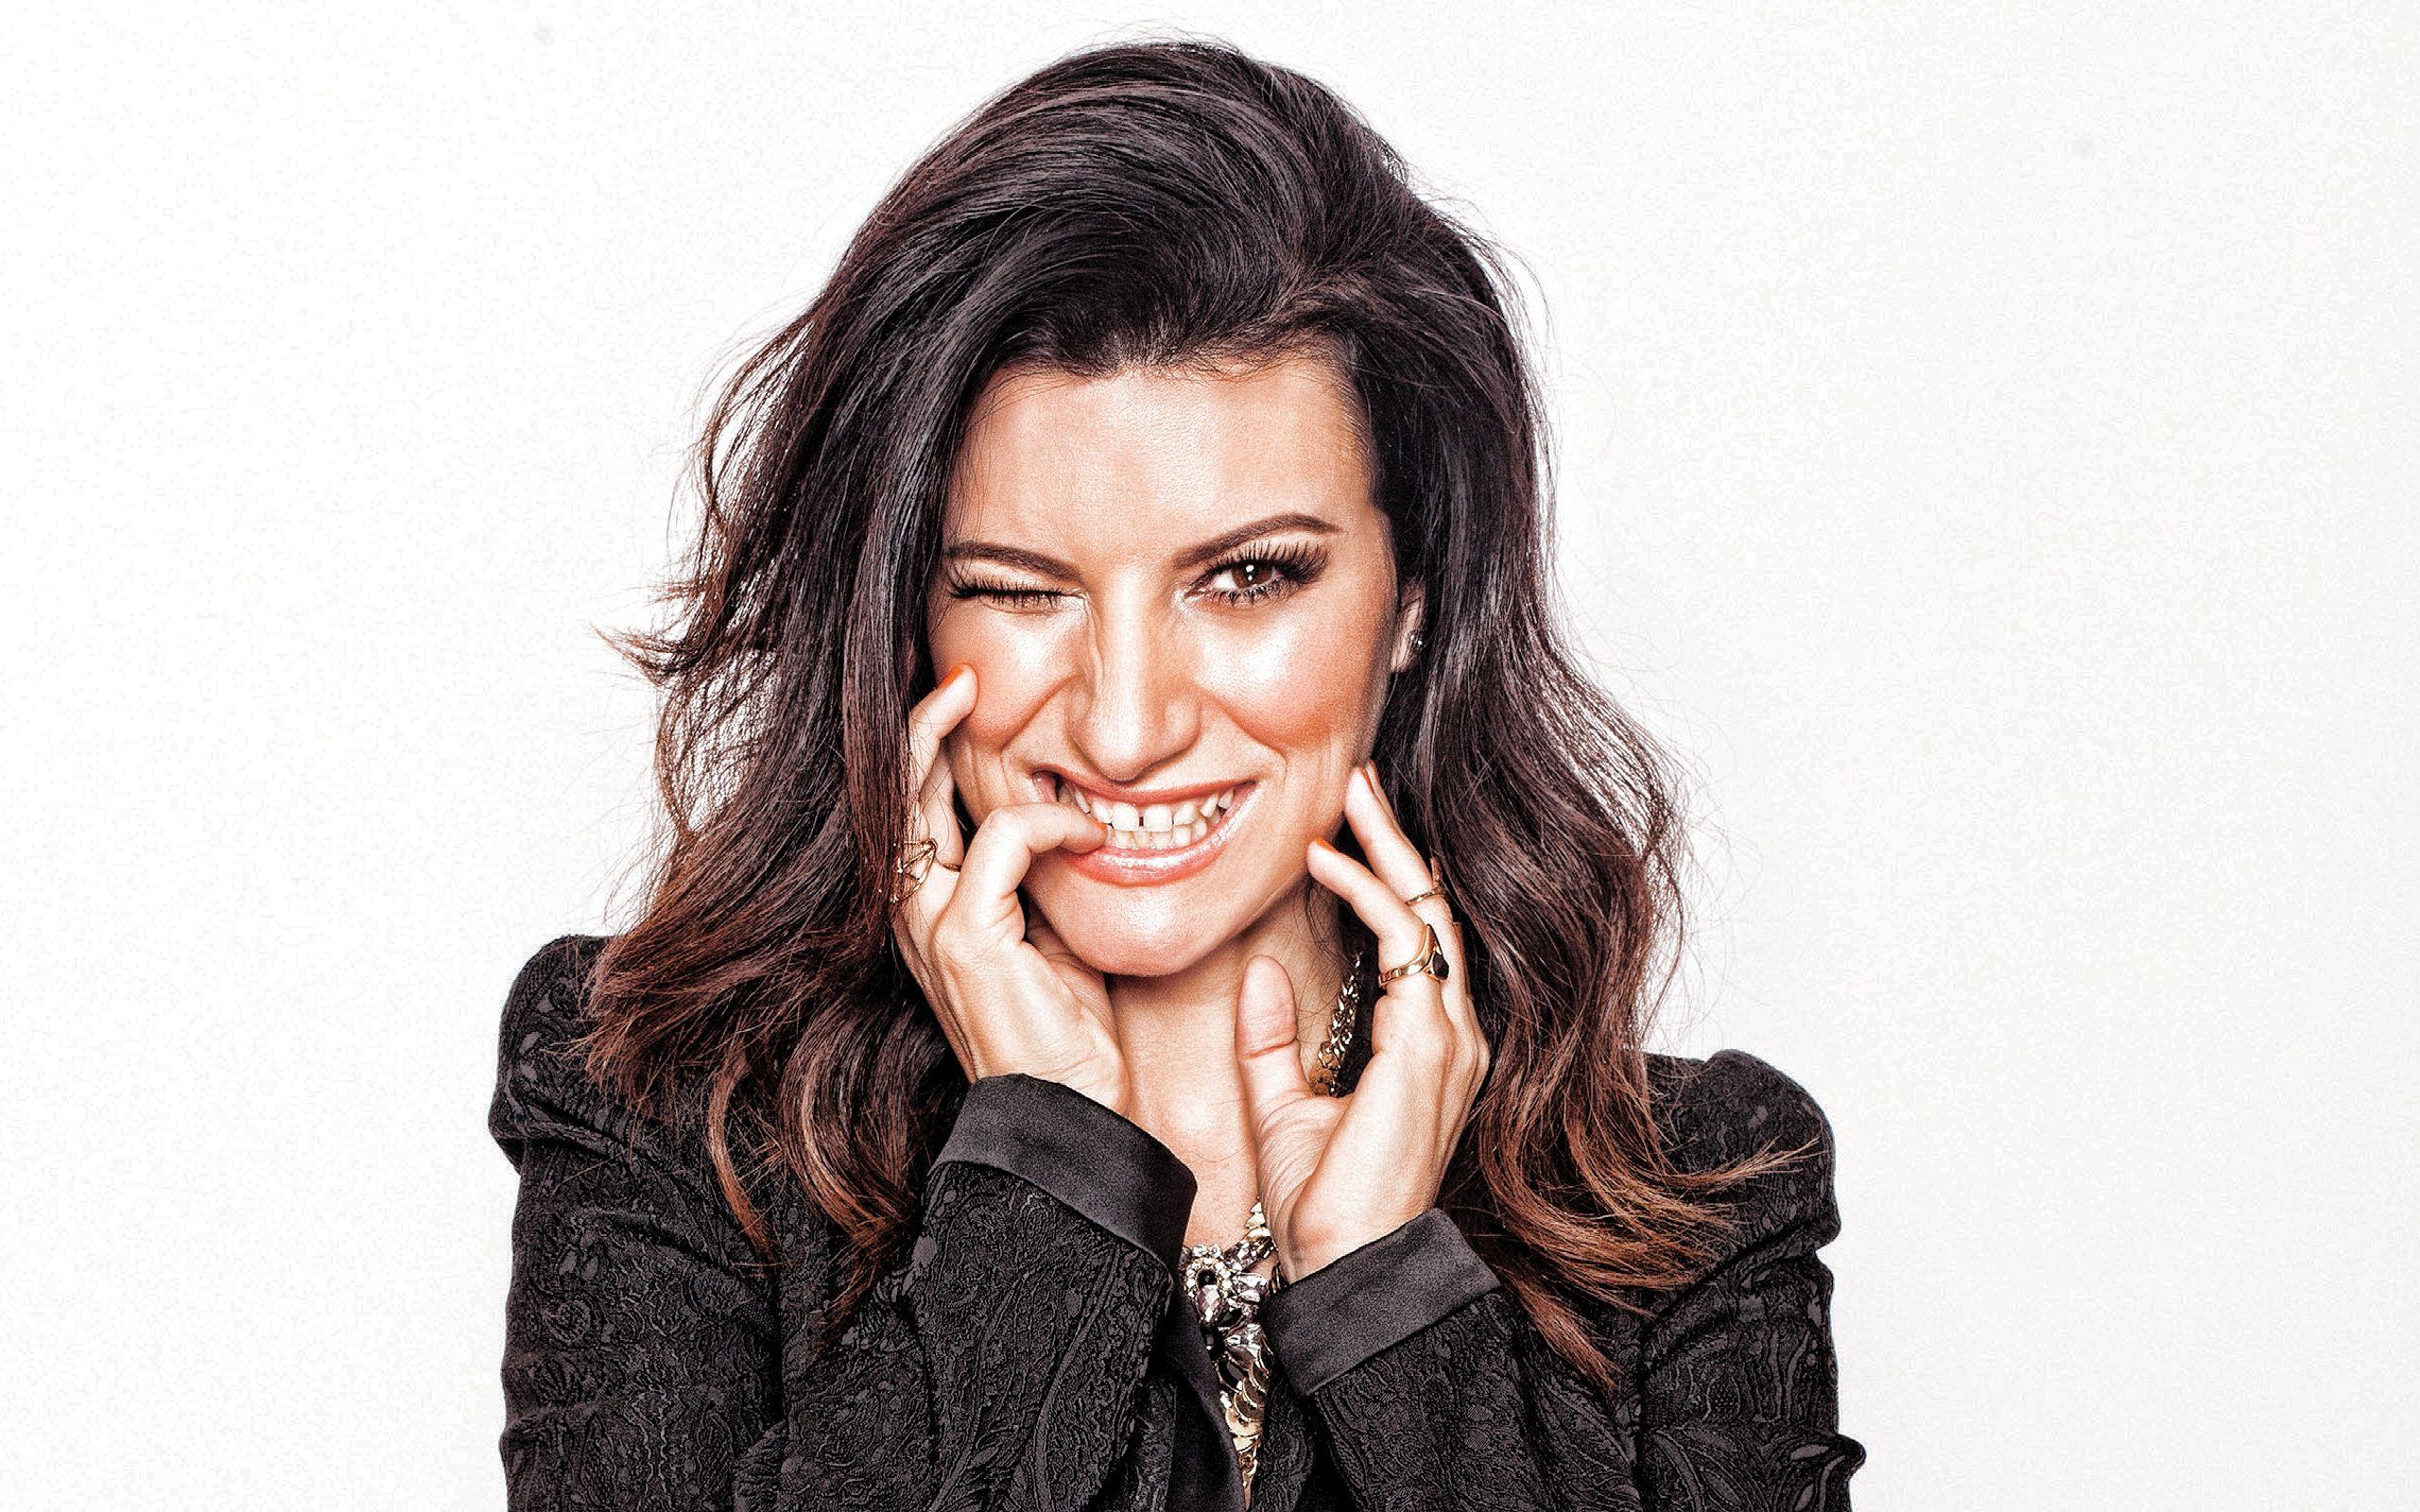 Laura Pausini Wallpapers Top Free Laura Pausini Backgrounds